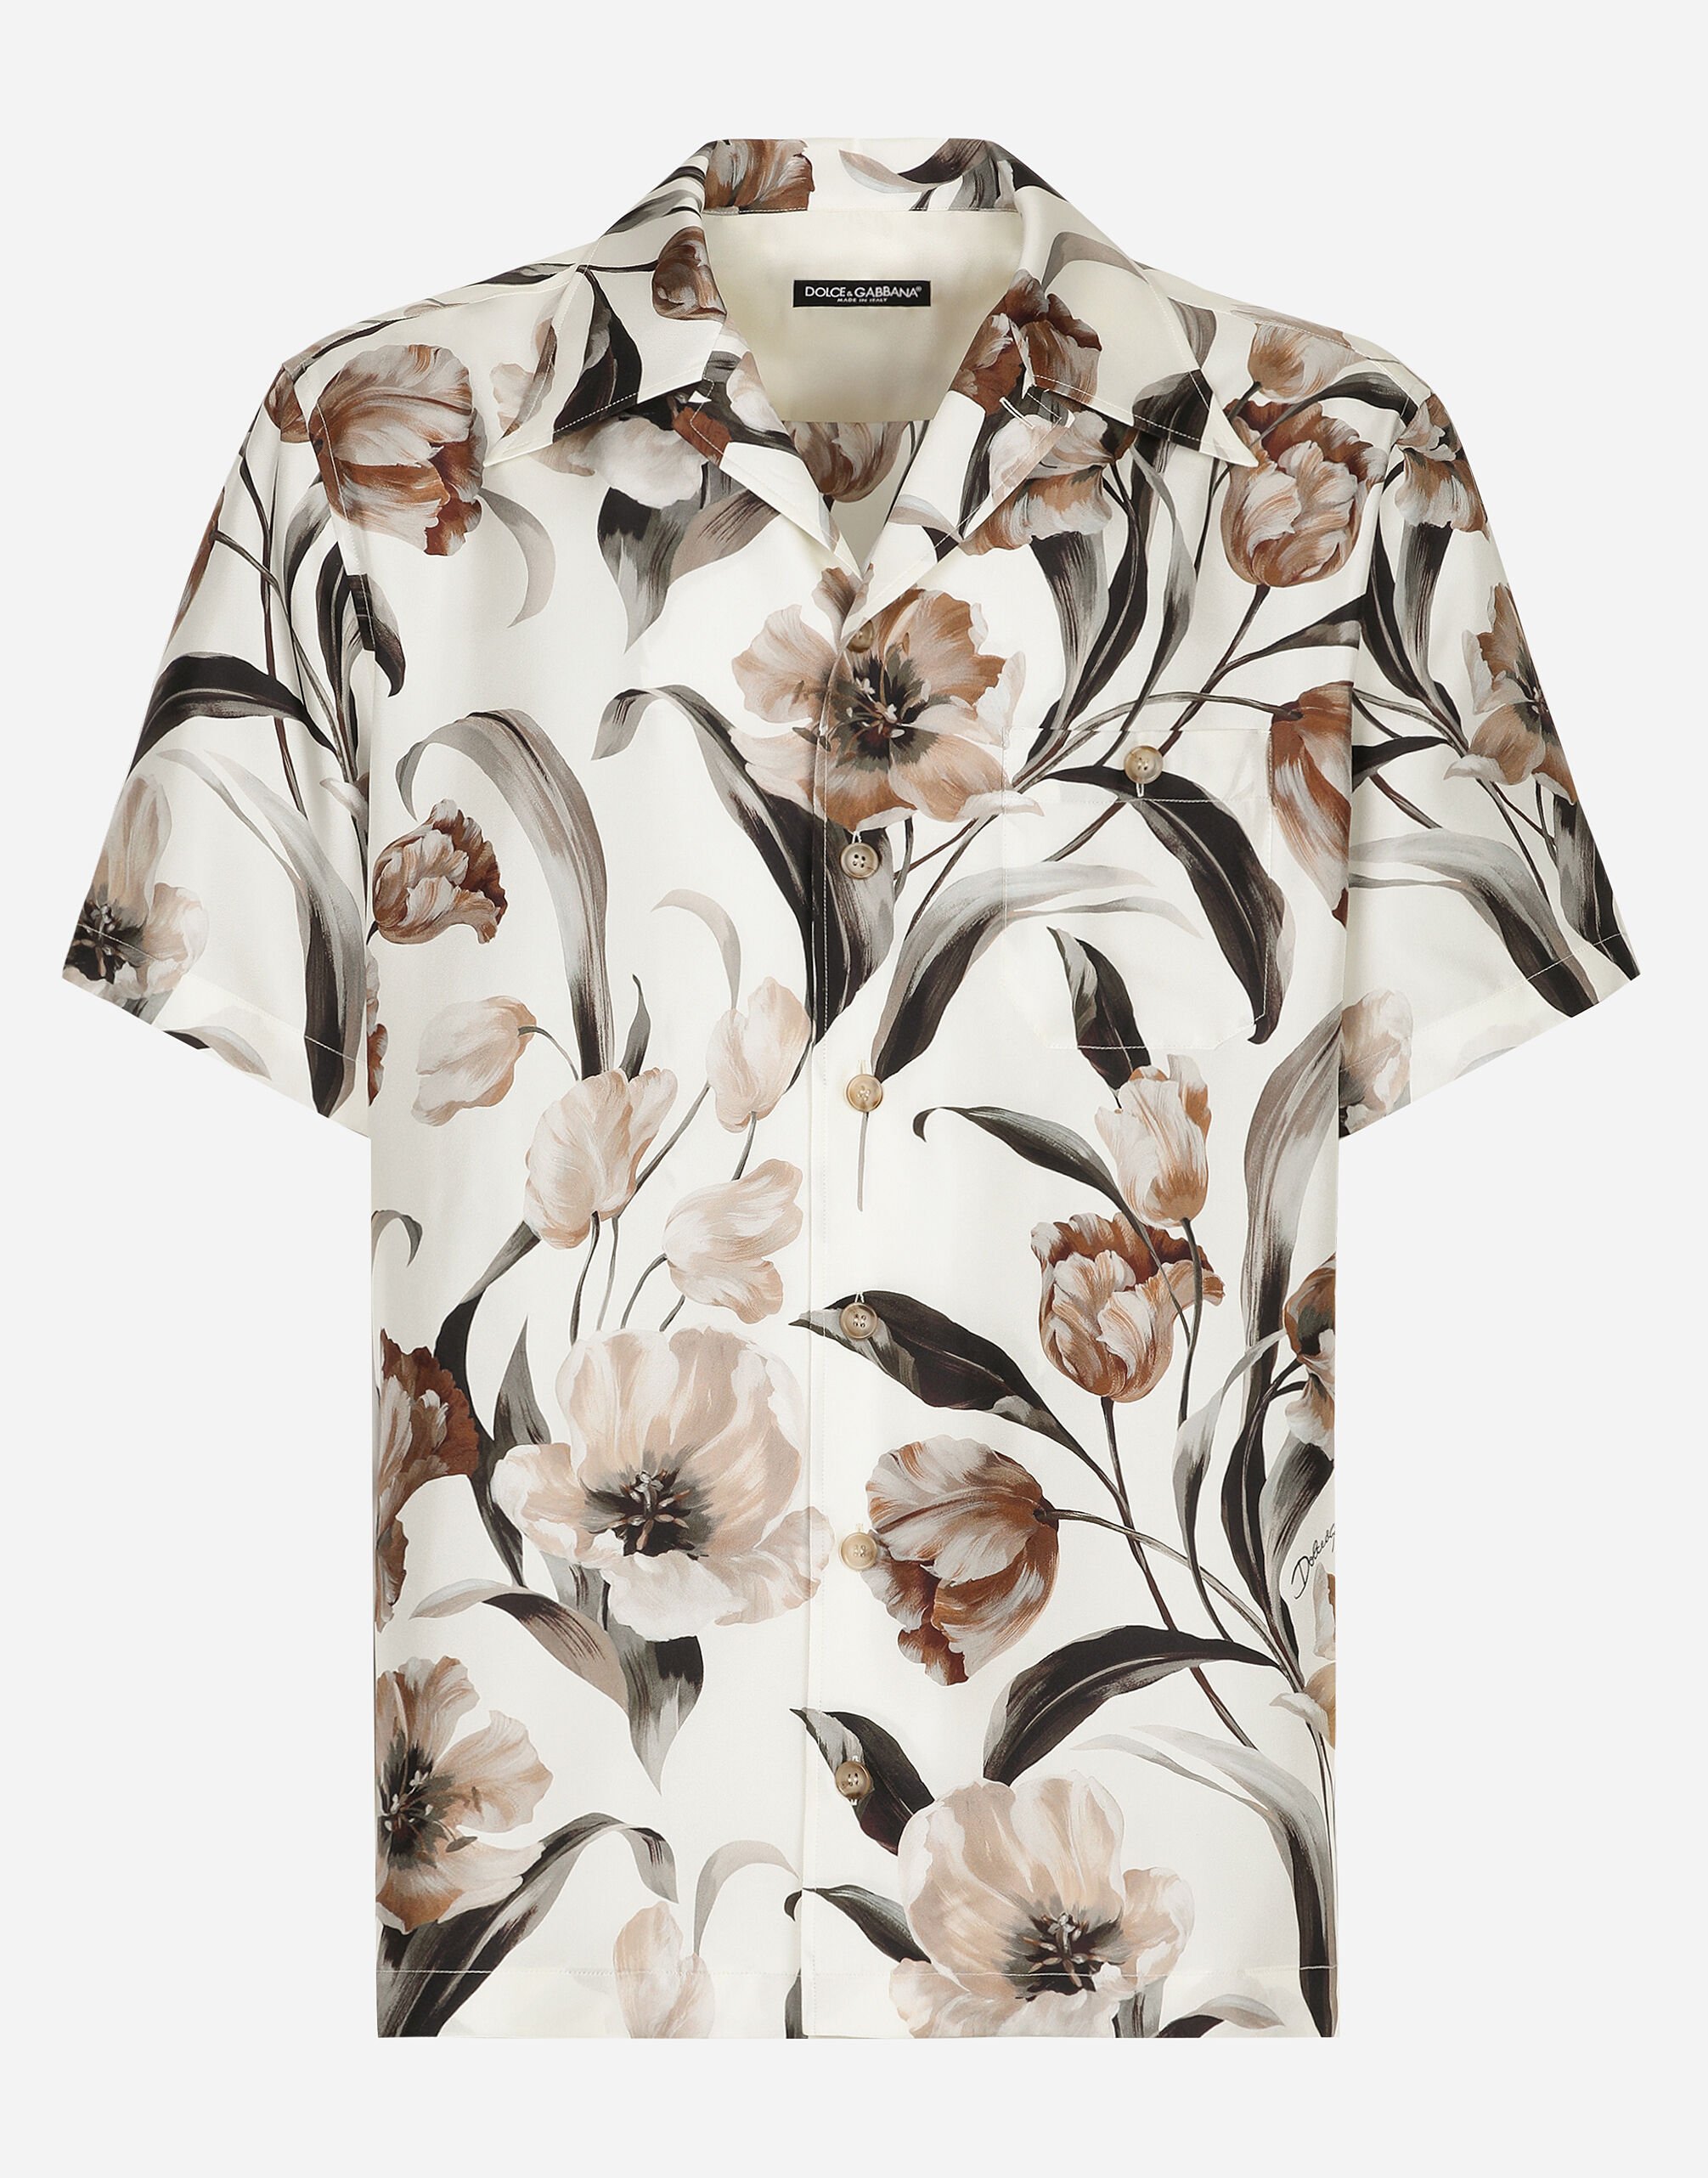 Dolce & Gabbana قميص هاواي حرير بطبعة توليب متعدد الألوان G2NW0TFU4L0